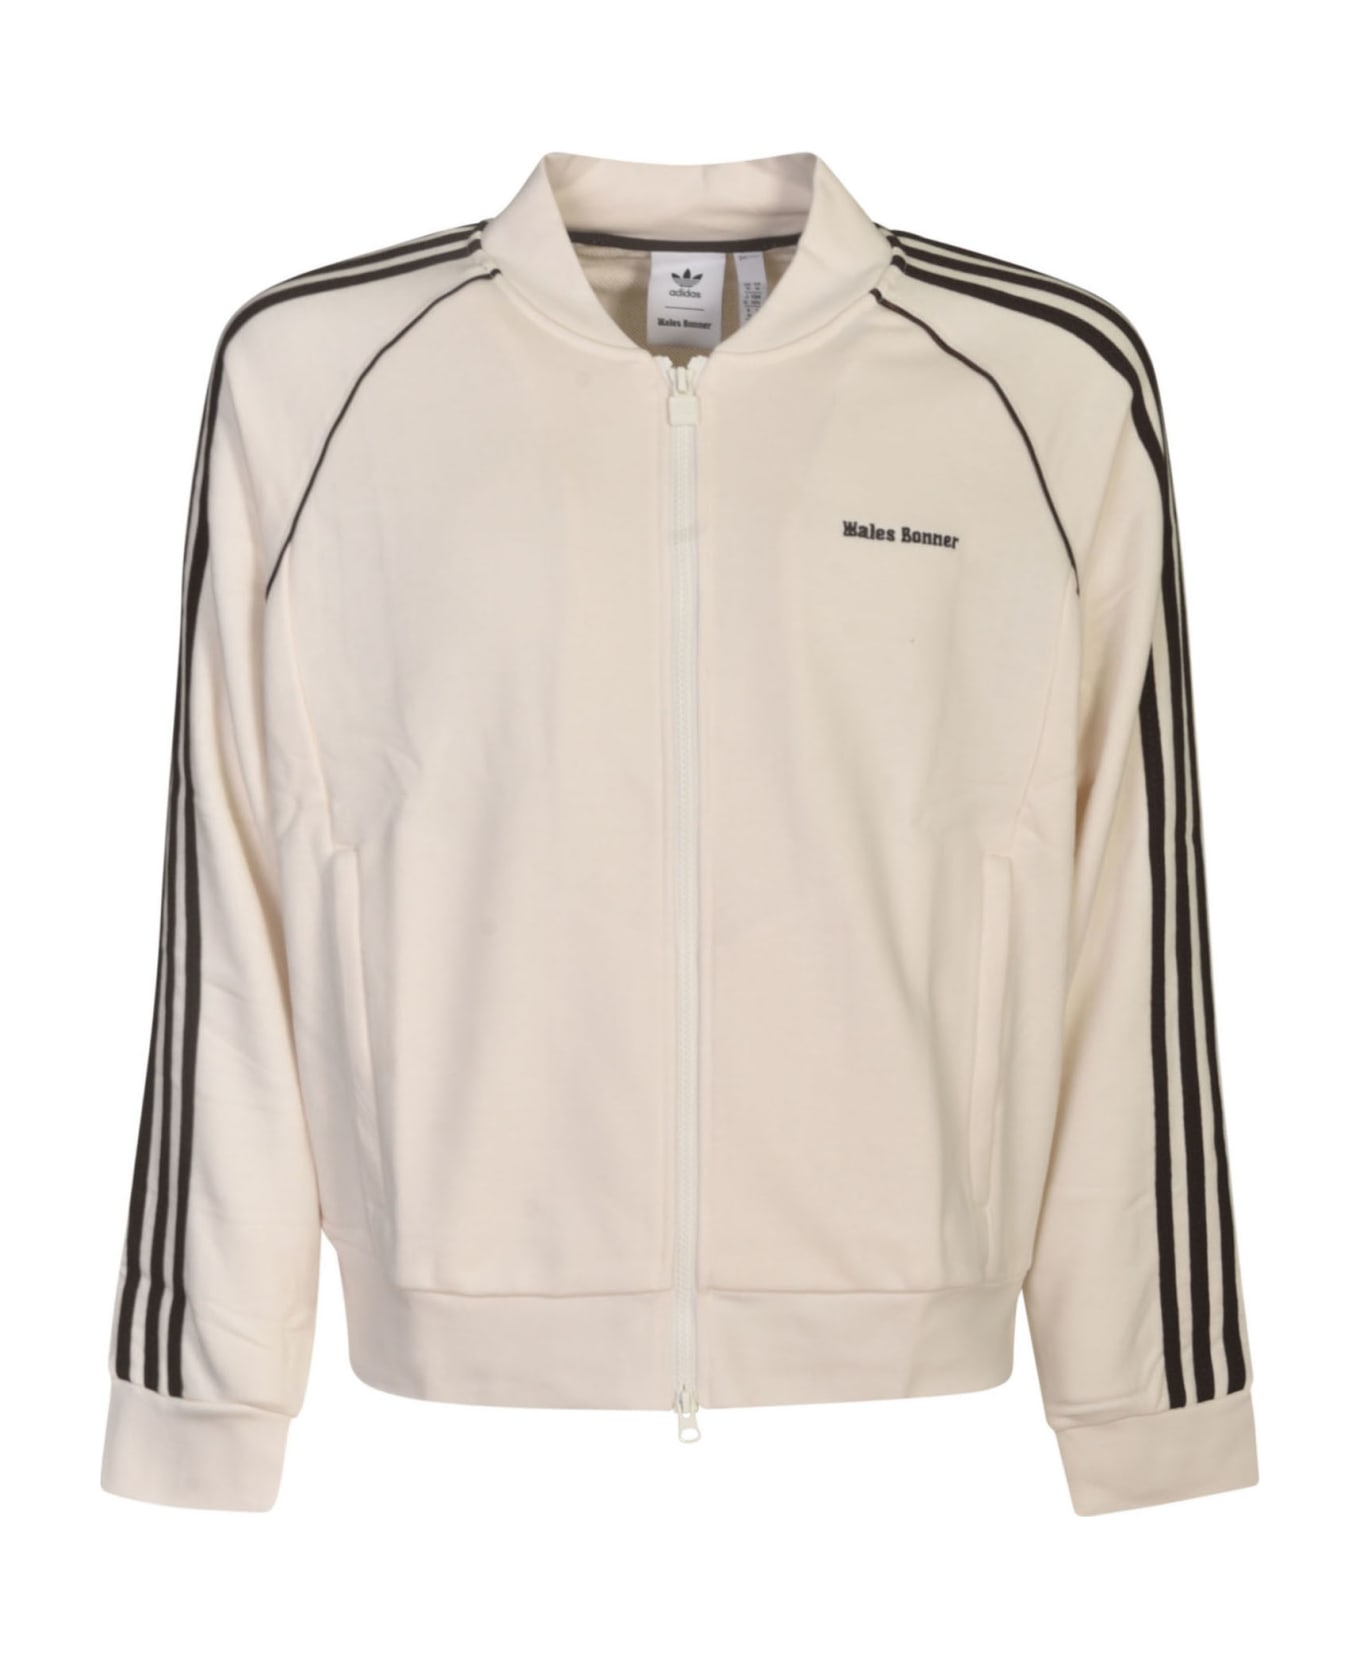 Adidas Originals by Wales Bonner Stripe Jacket - White